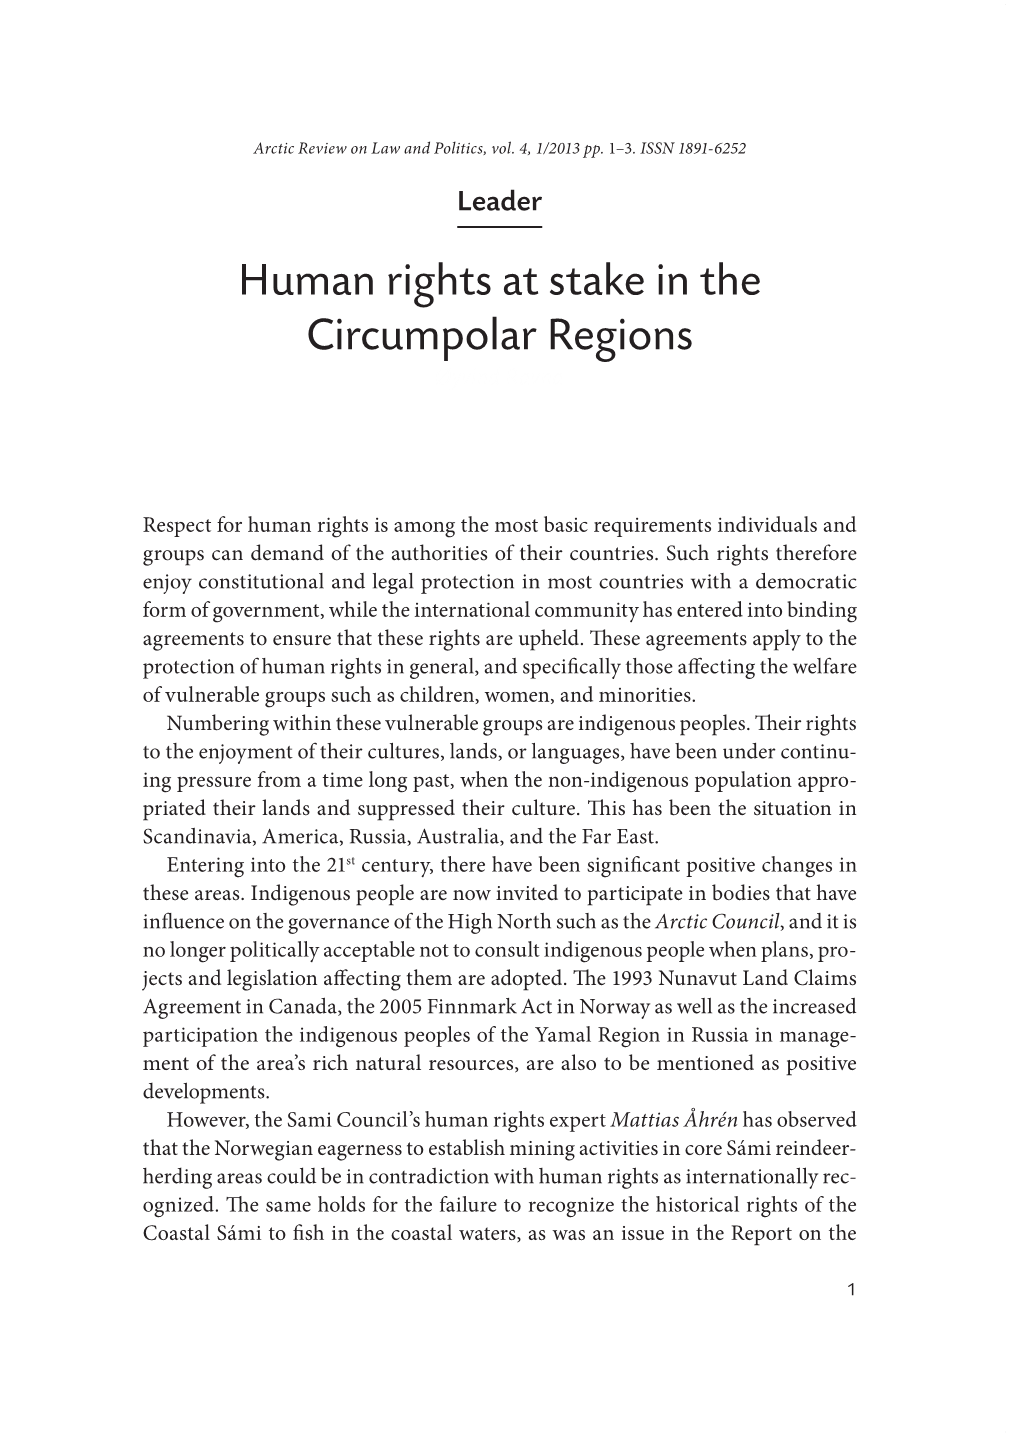 Human Rights at Stake in the Circumpolar Regions Øyvind Ravna